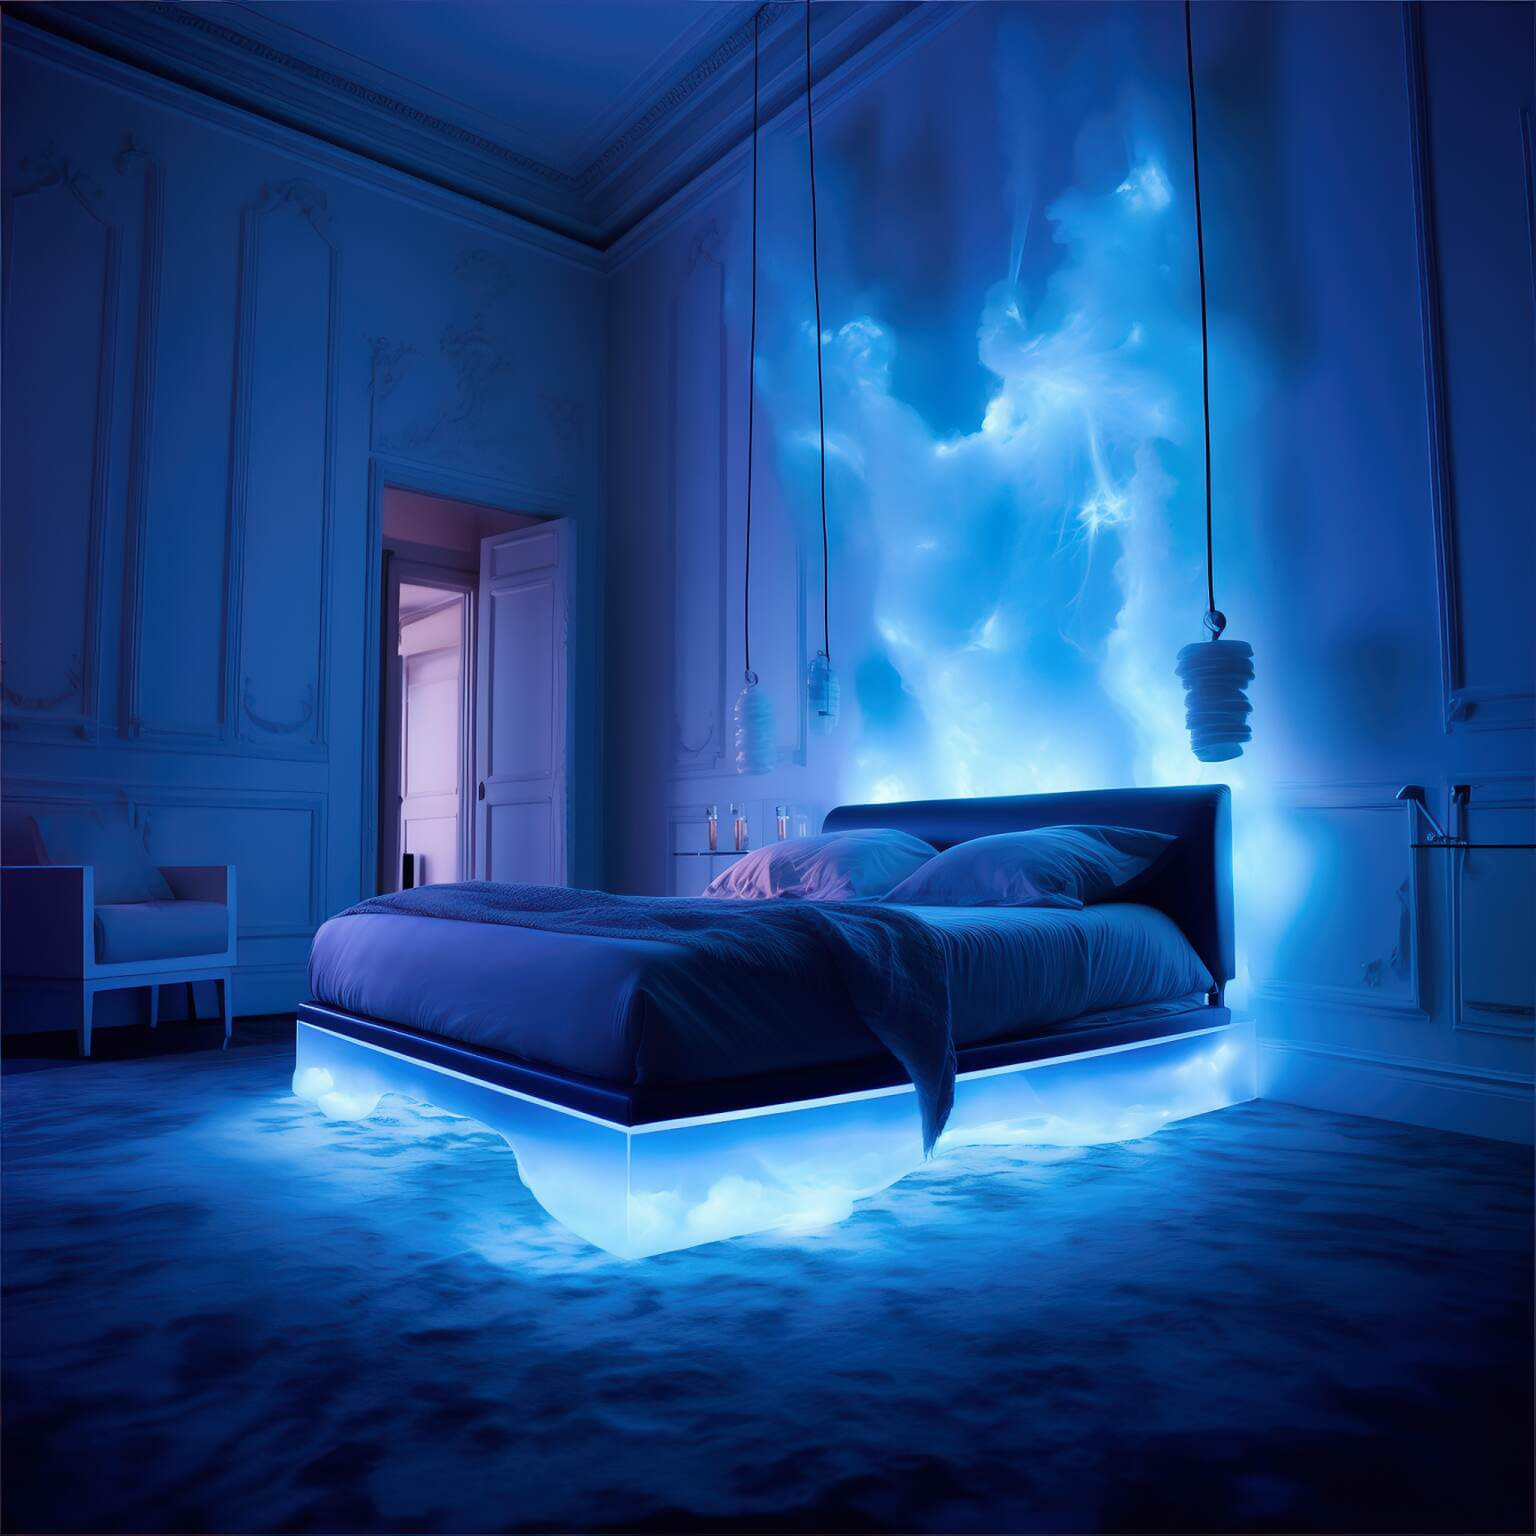 Ethereal Blue Neon Bedroom